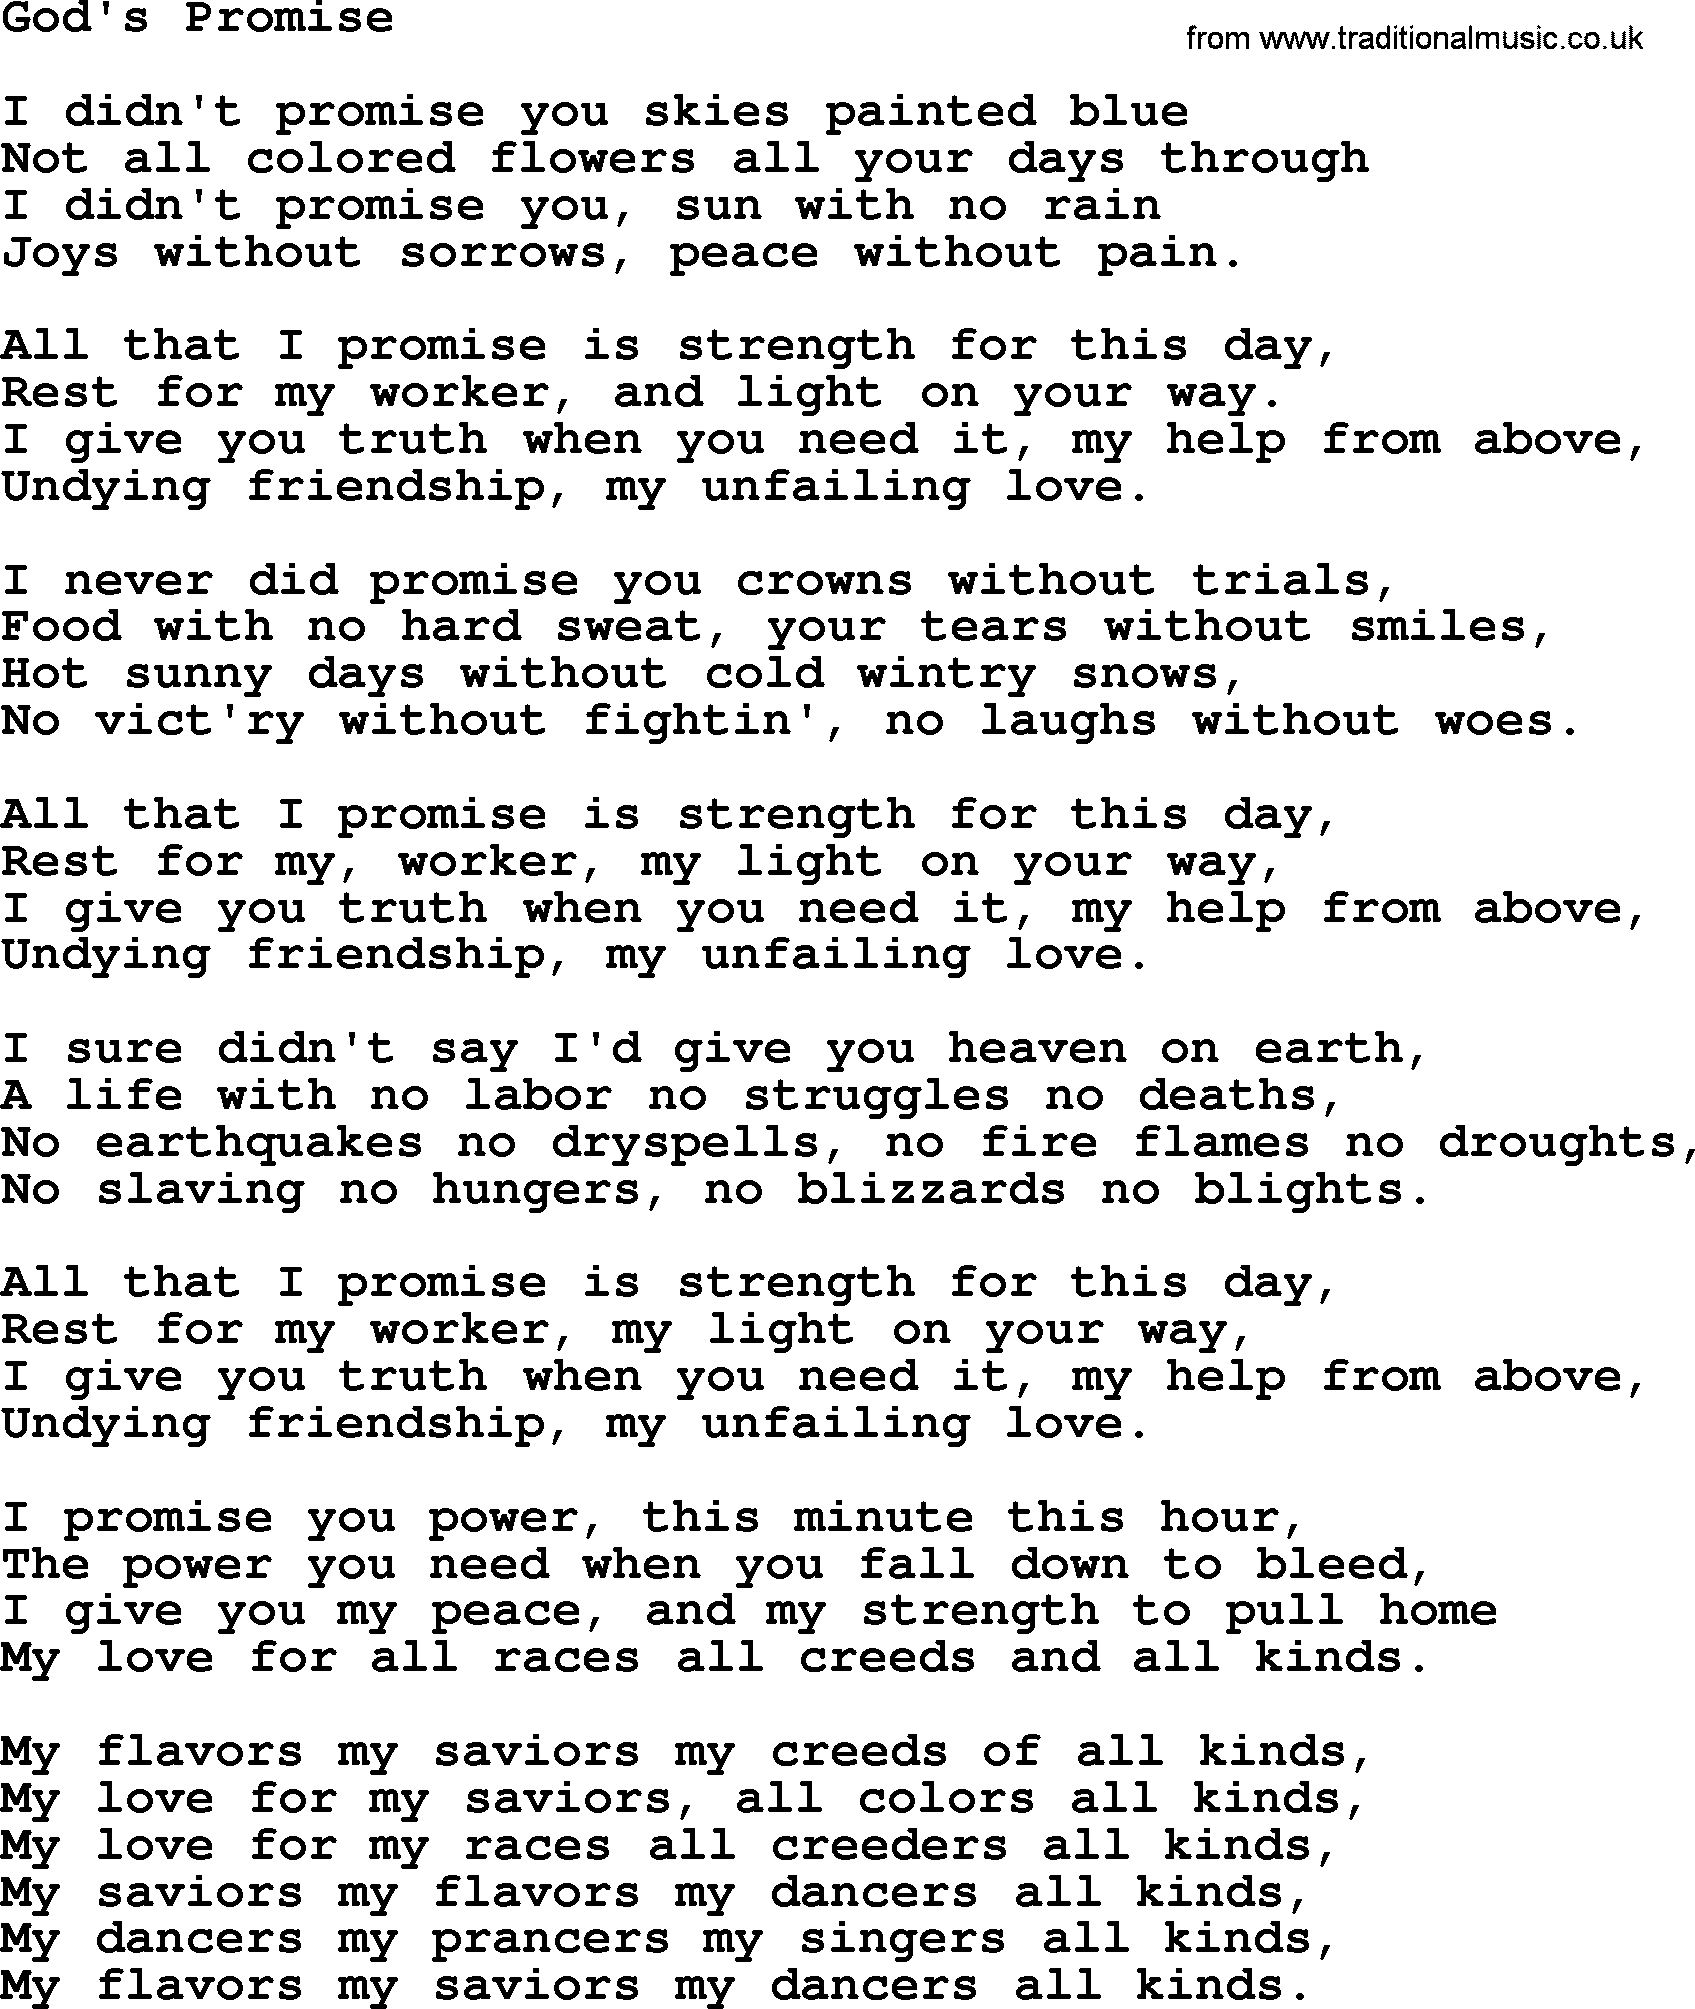 Woody Guthrie song Gods Promise lyrics